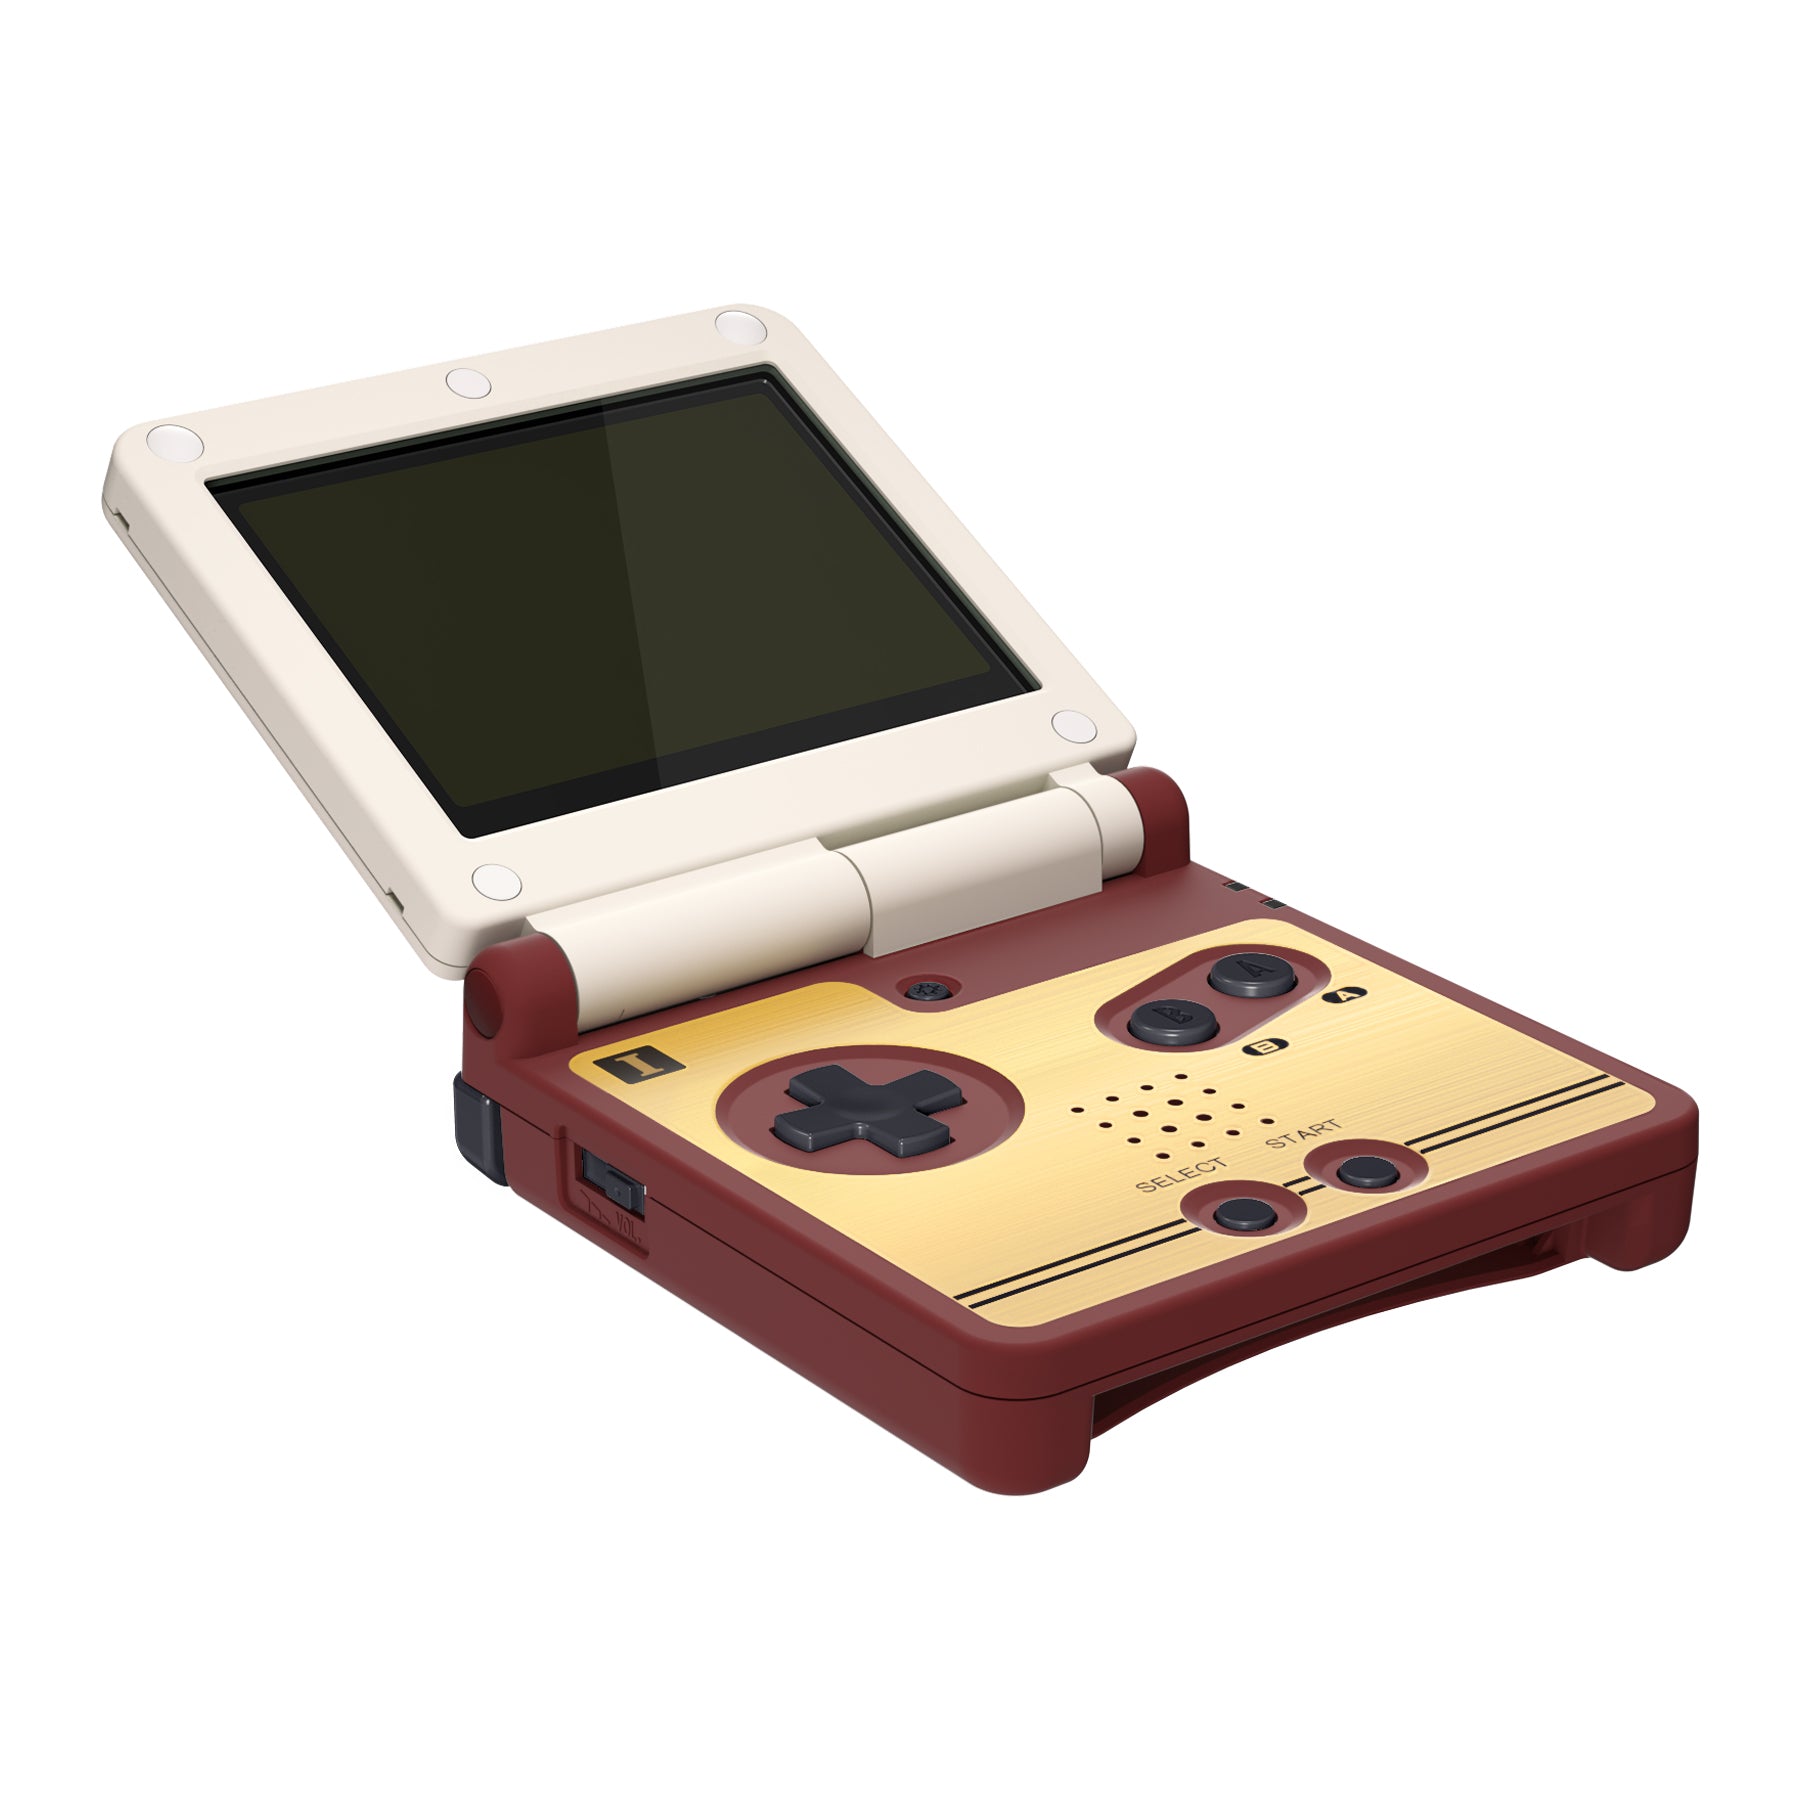 Restoring and Upgrading Nintendo's Original Game Boy